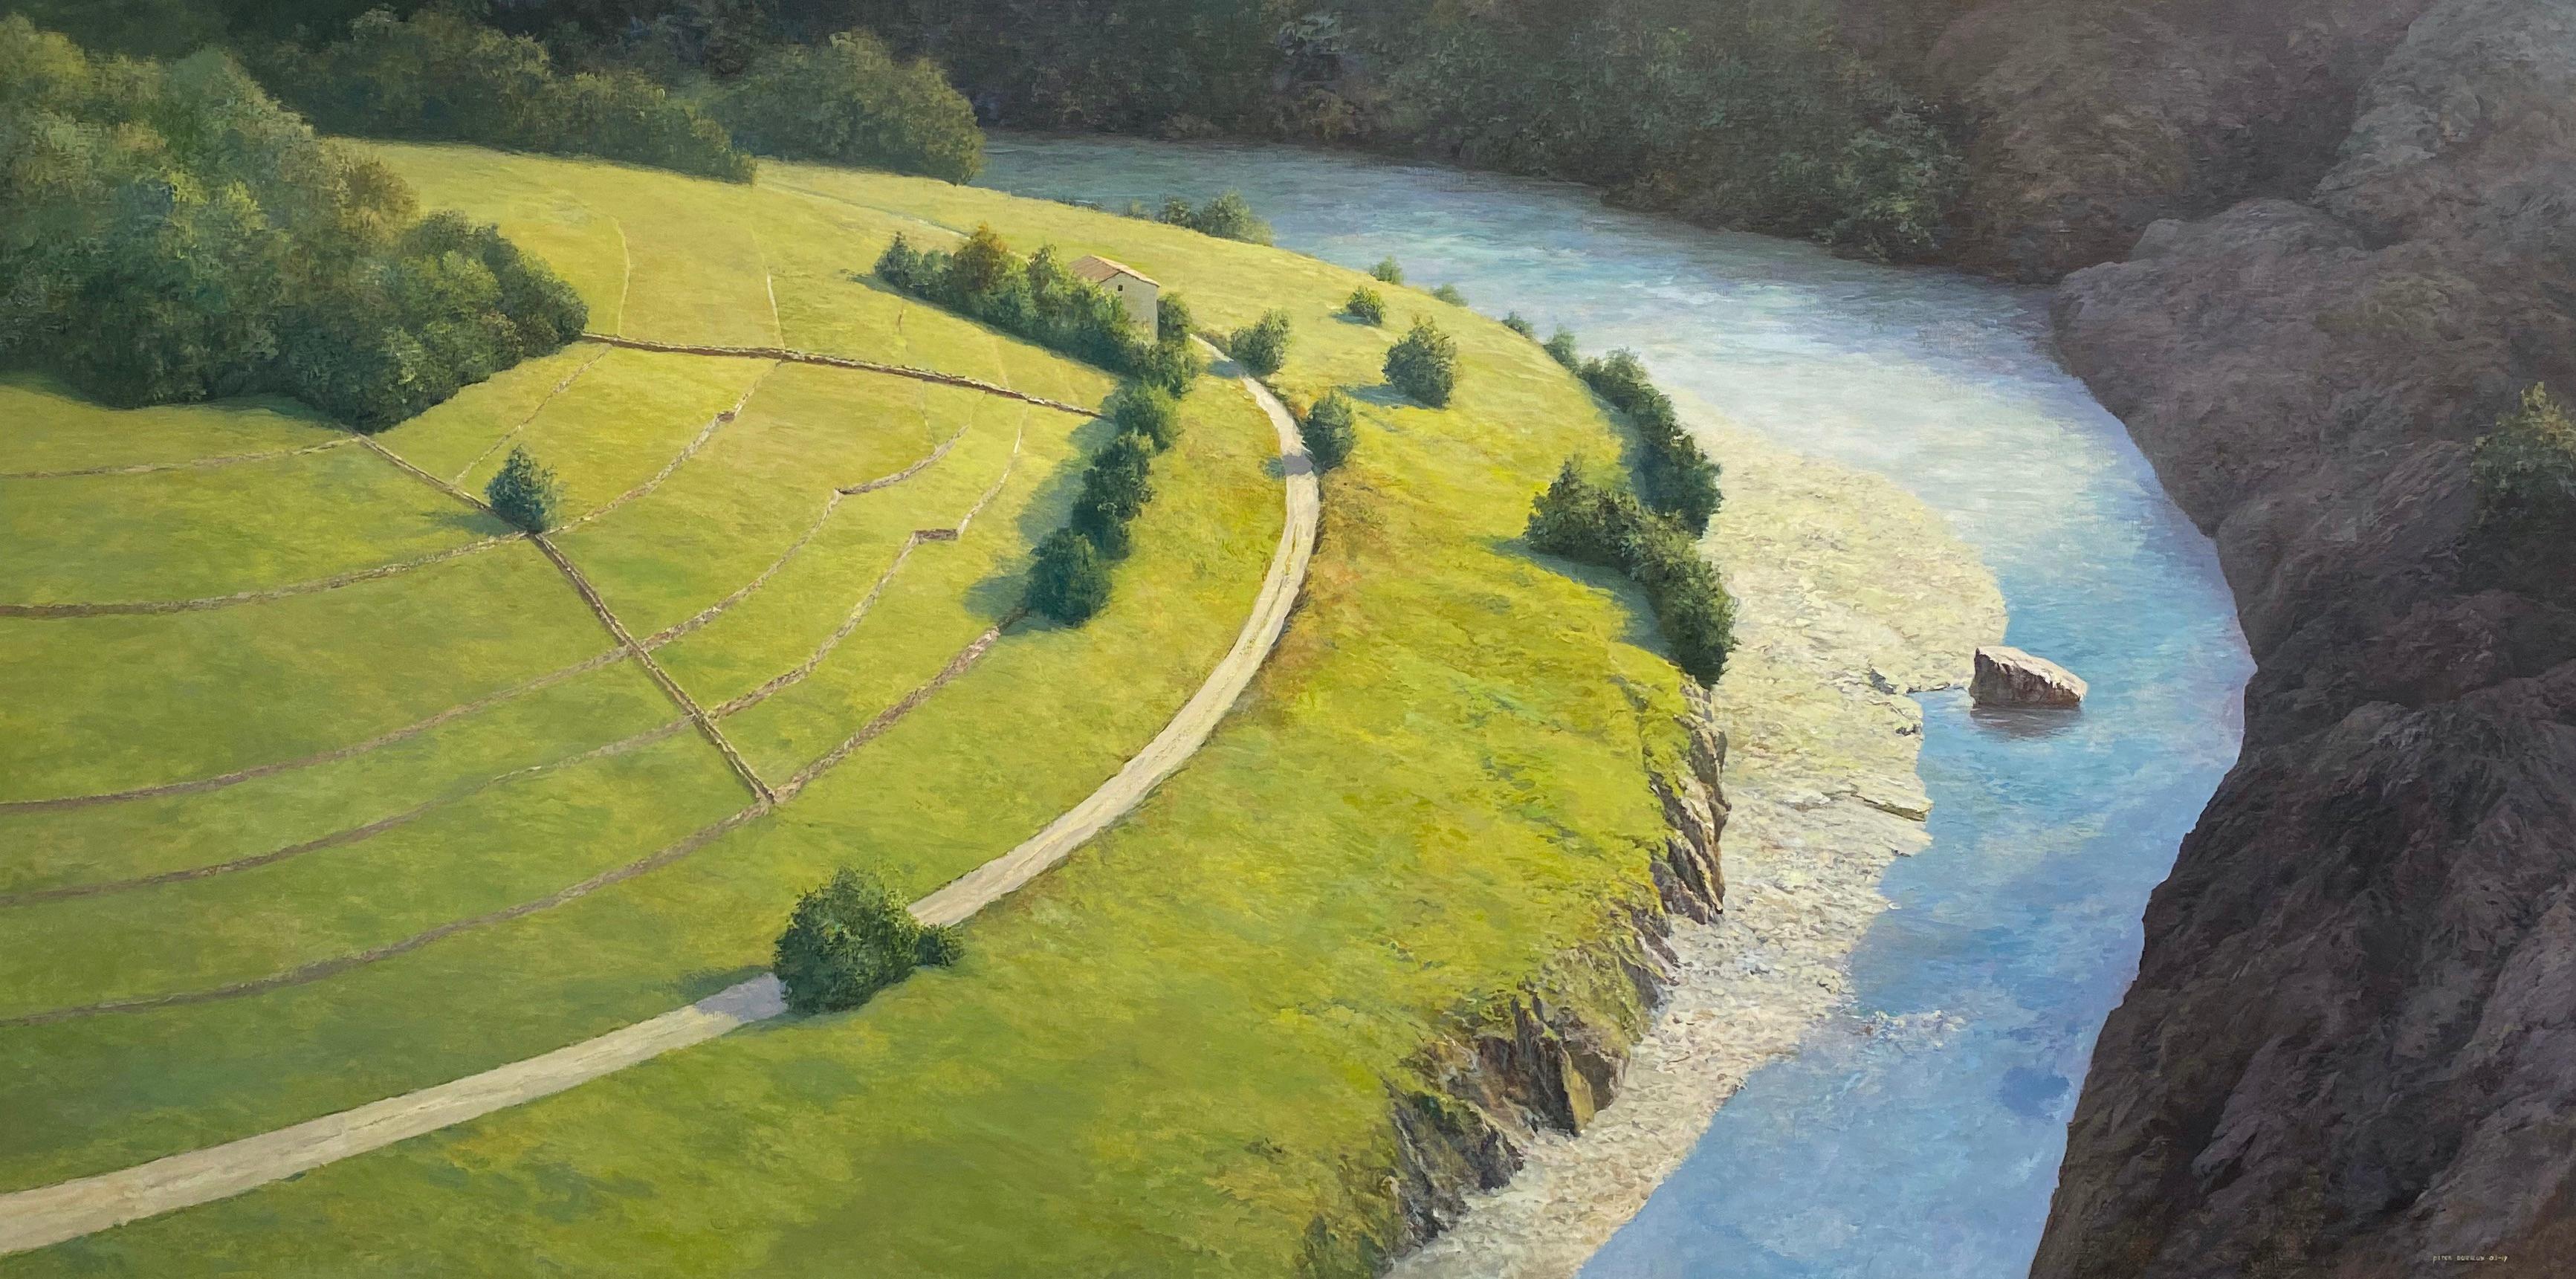 Chambonnet- 21st Century Dutch Painting of a French Ardèche landscape.